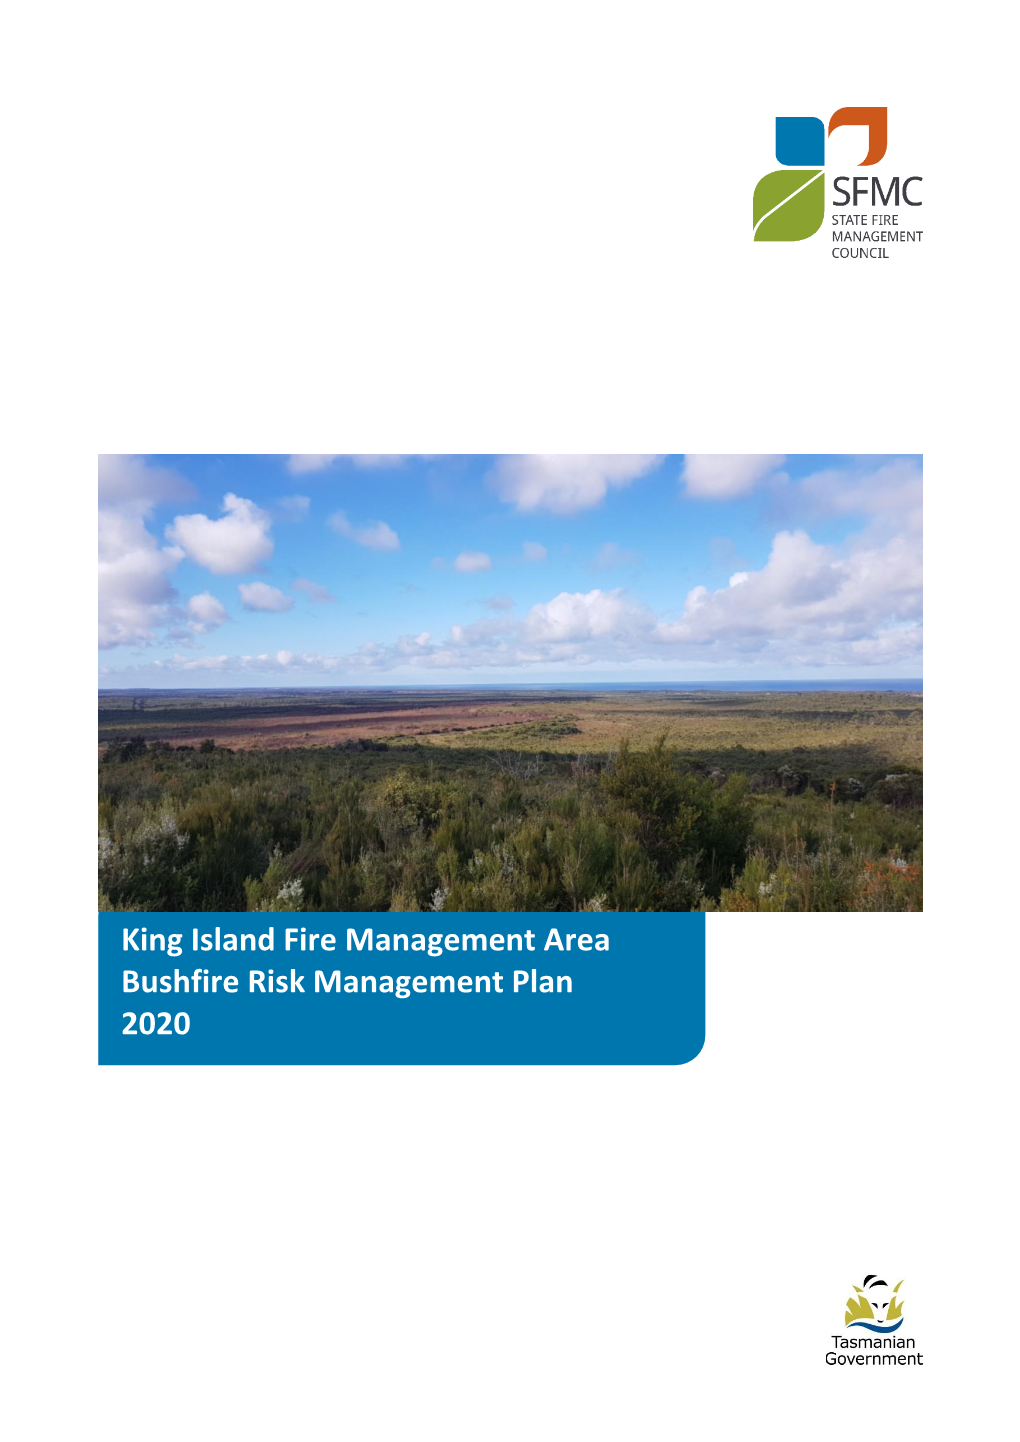 King Island Fire Management Area Bushfire Risk Management Plan 2020